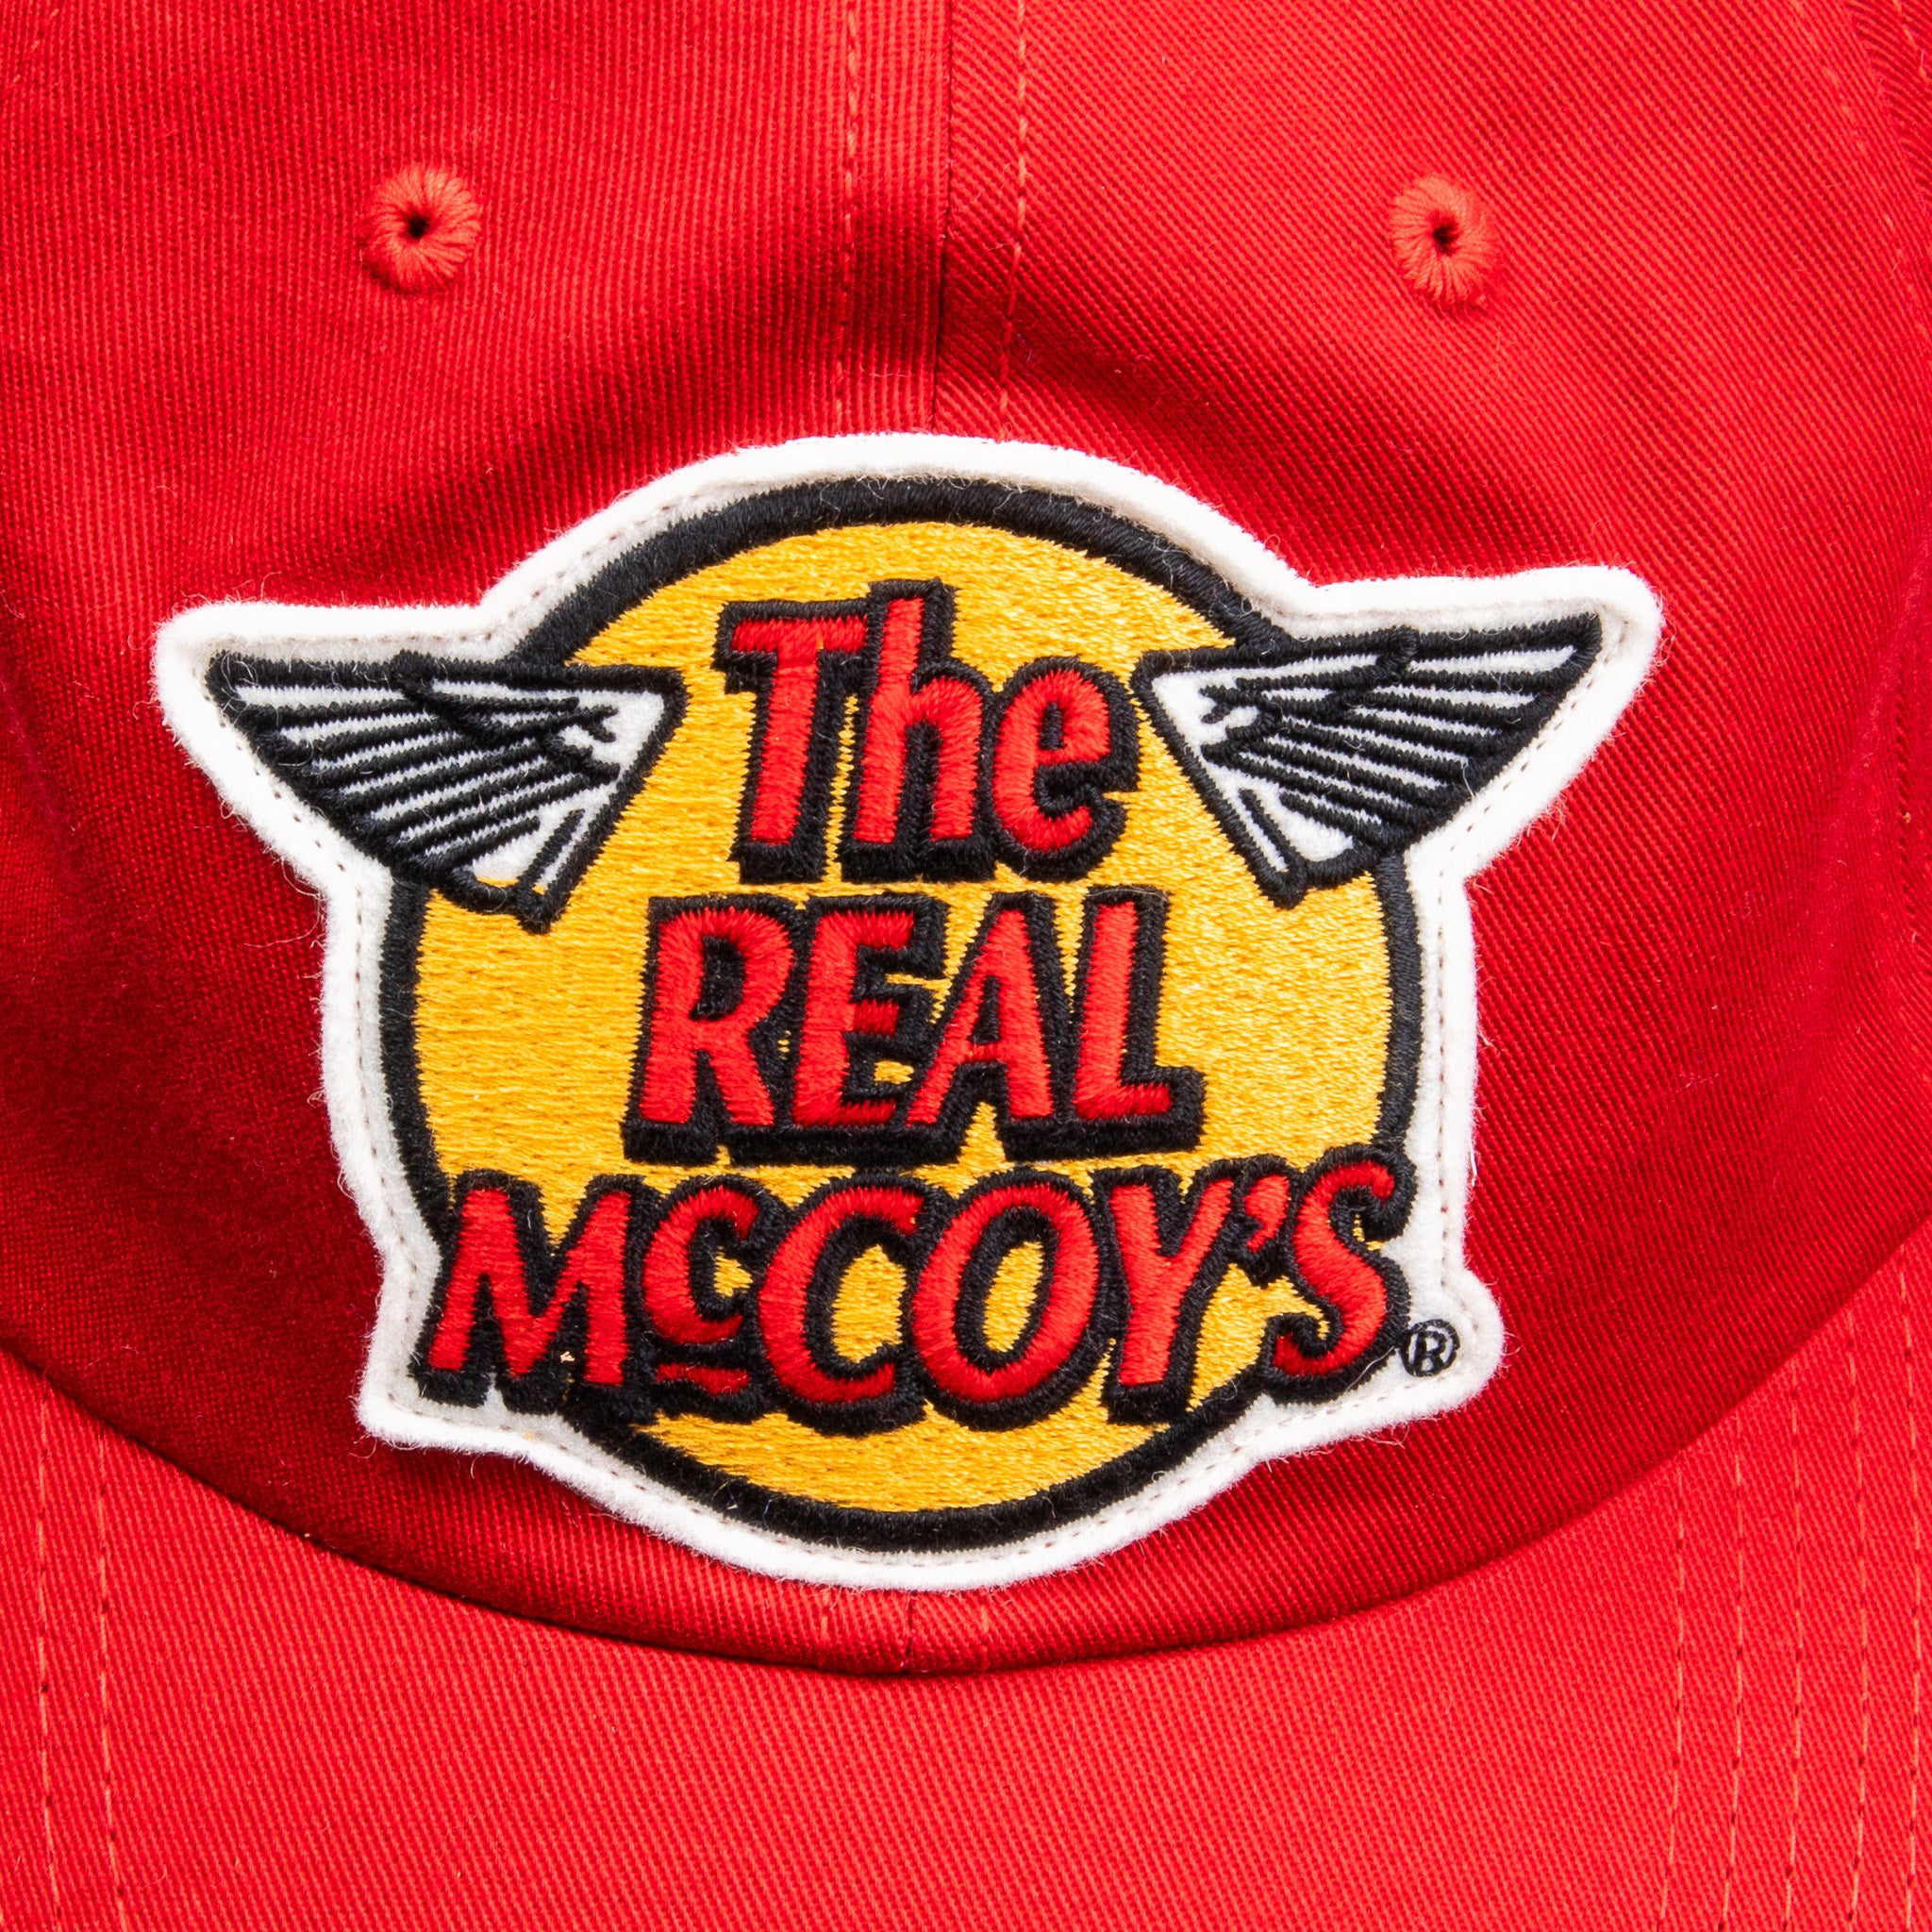 The Real McCoy&#39;s Logo Baseball Cap Red